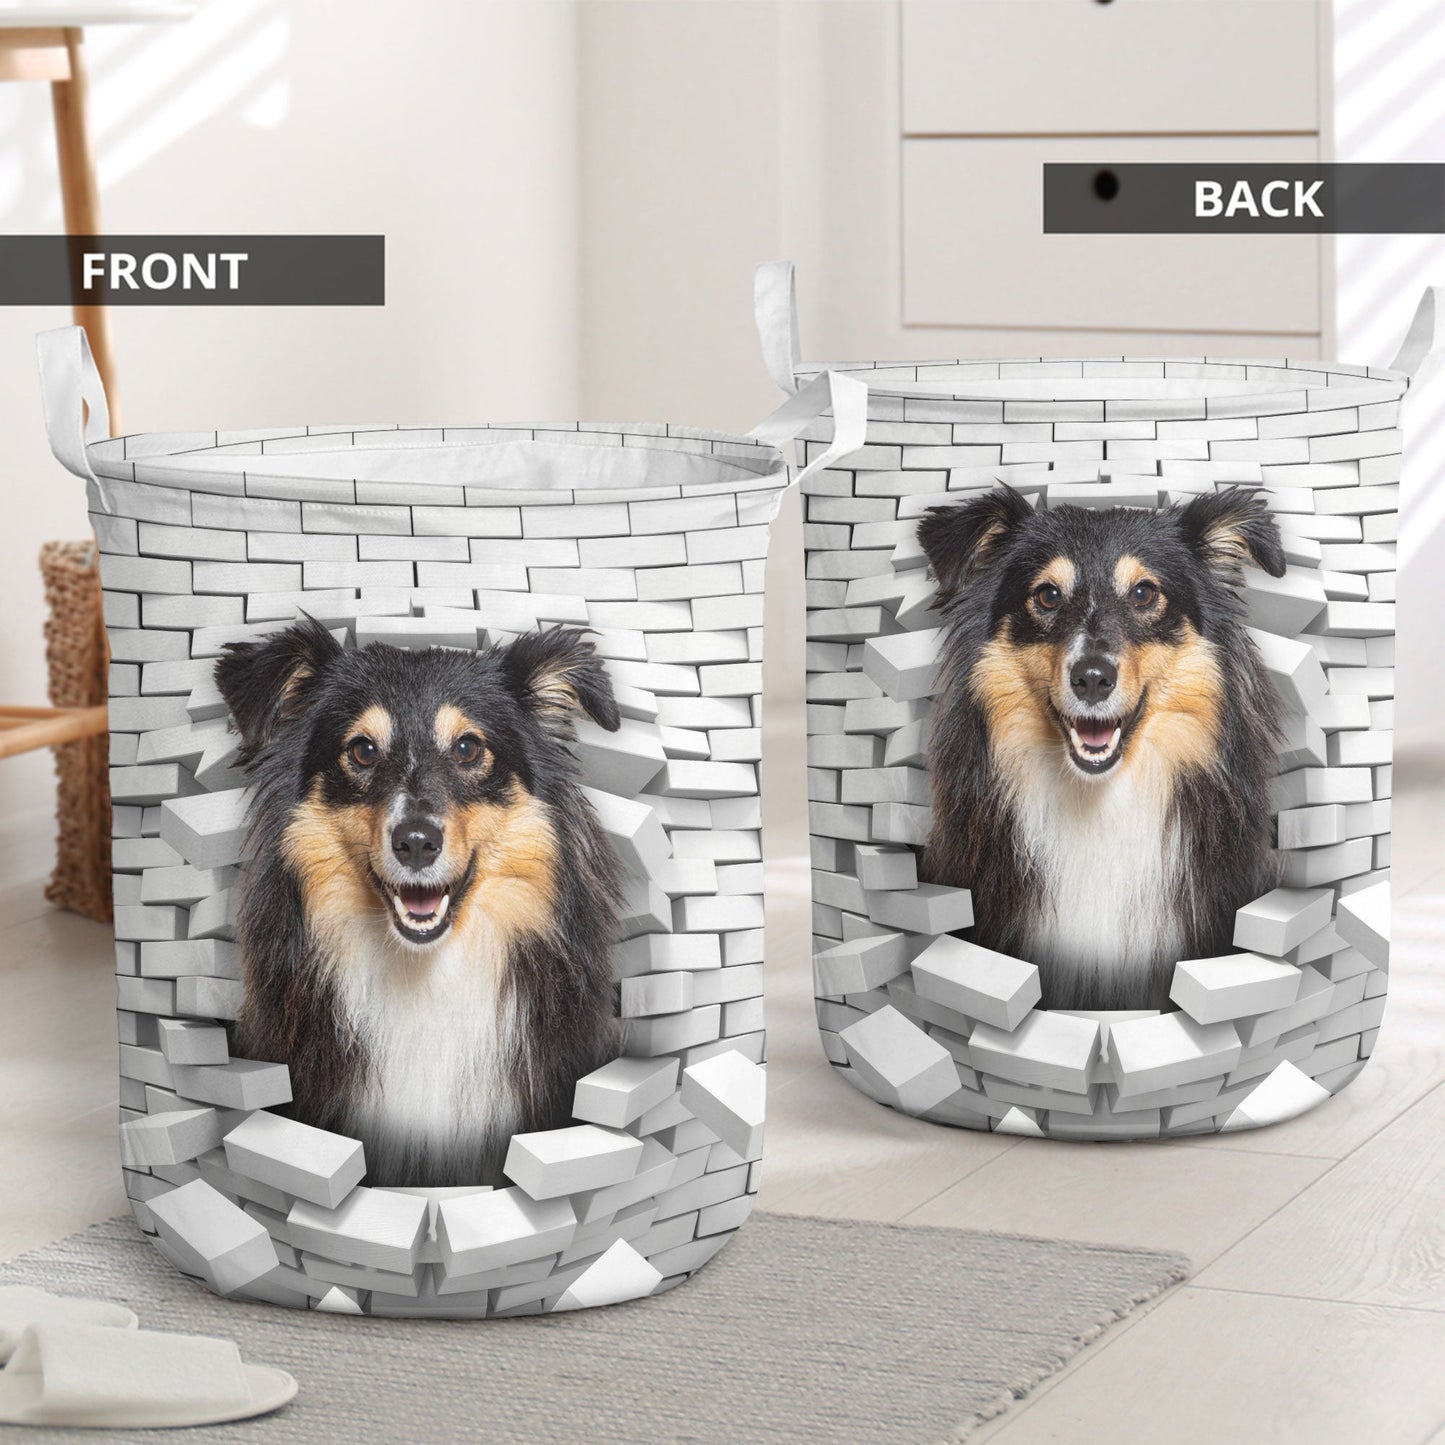 Shetland Sheepdog - In The Hole Of Wall Pattern Laundry Basket